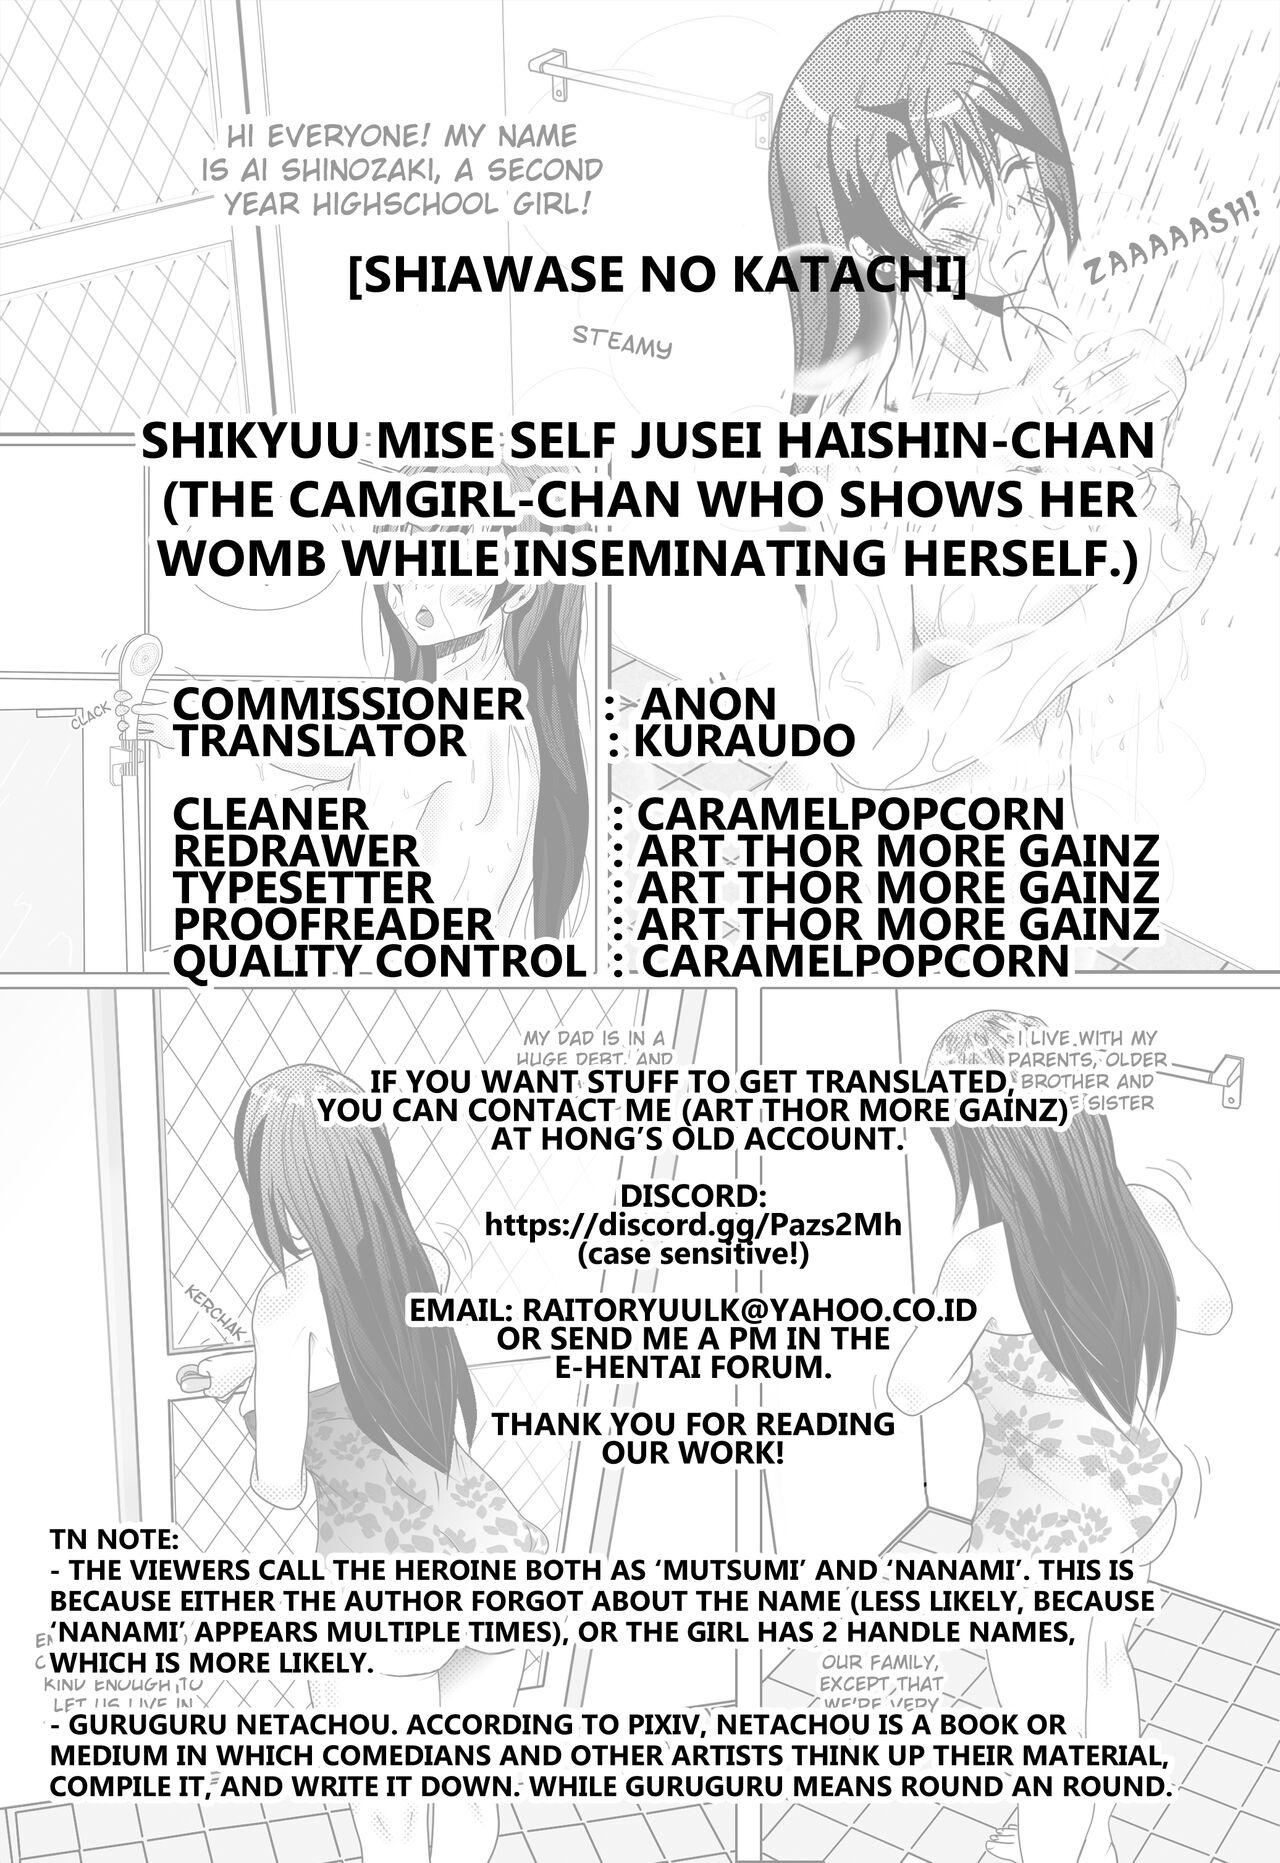 Shikyuu Mise Self Jusei Haishin-chan 9